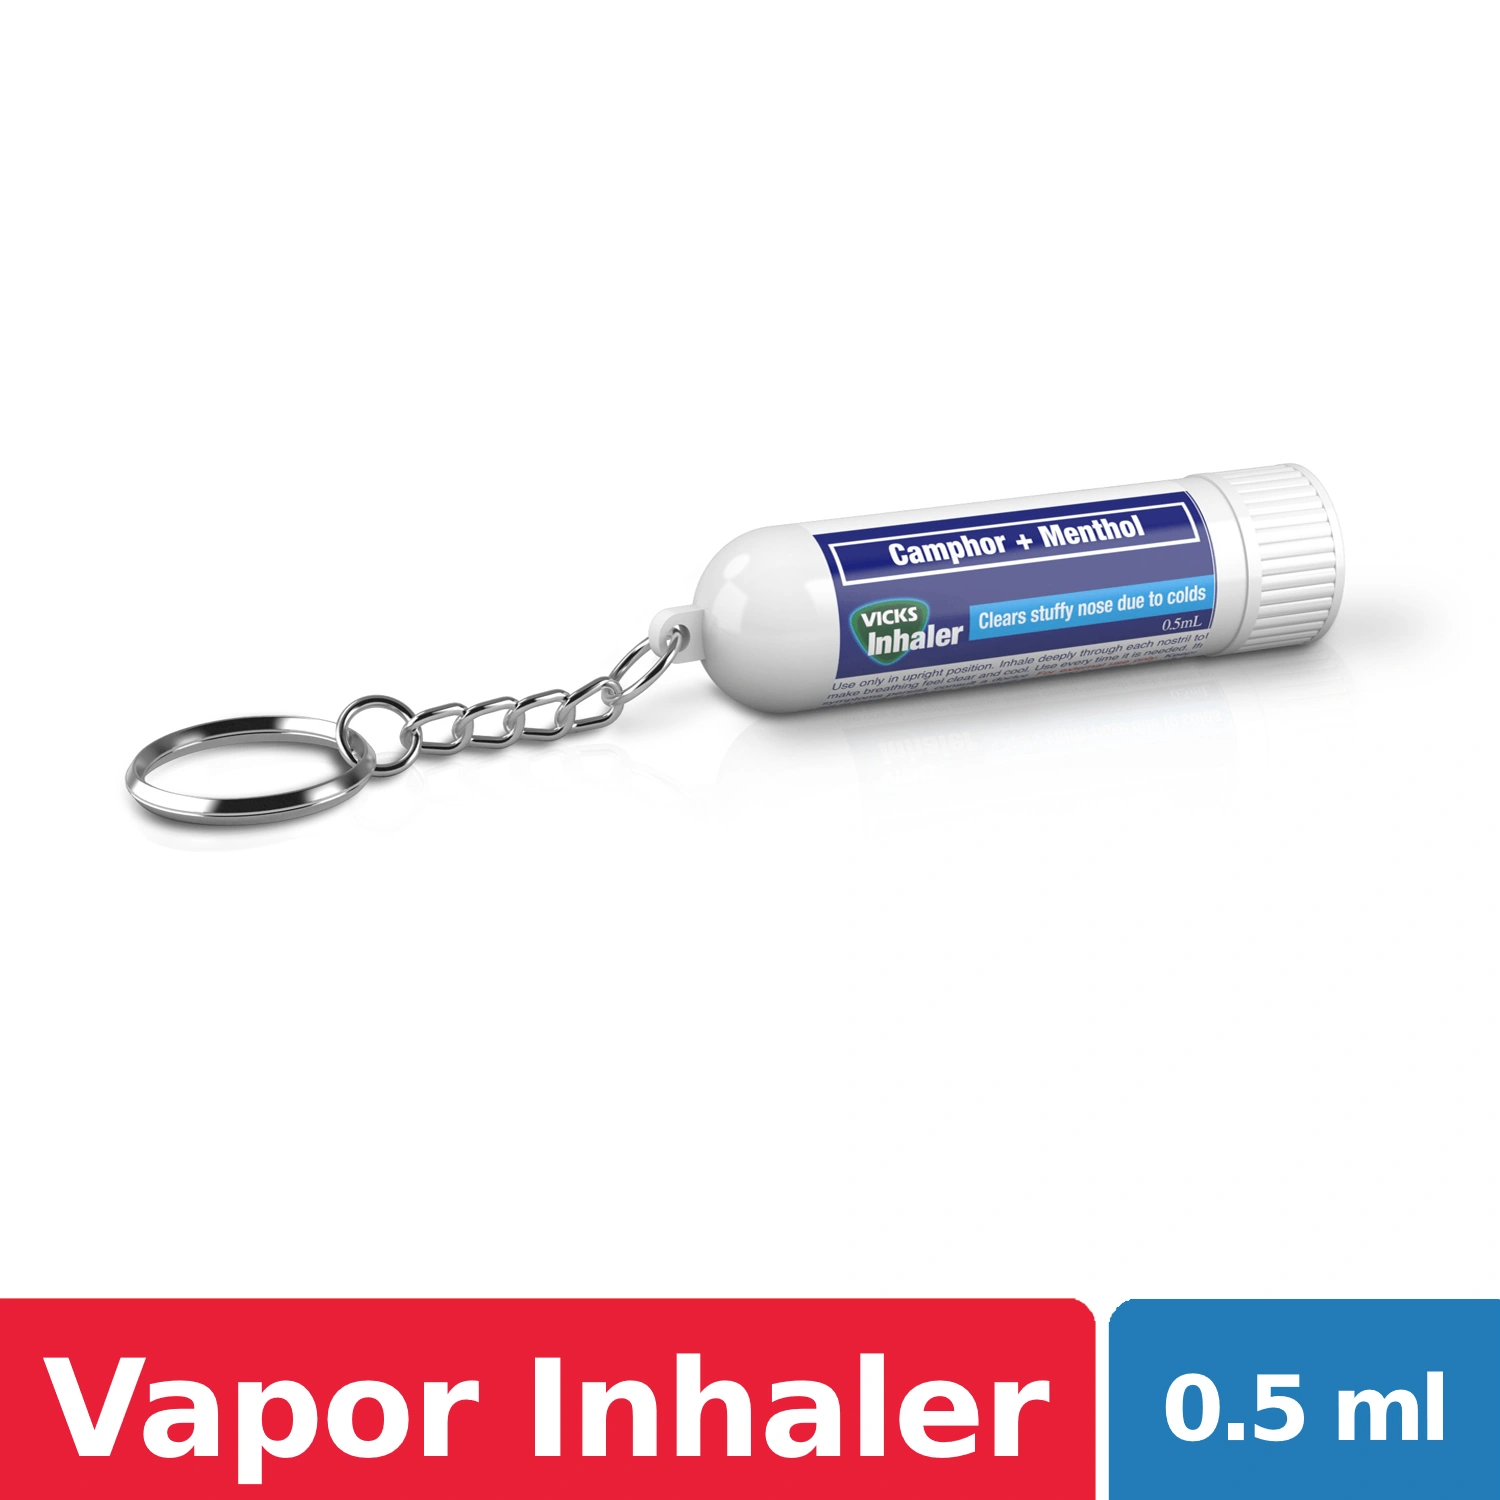 Vicks Inhaler 0.5ML